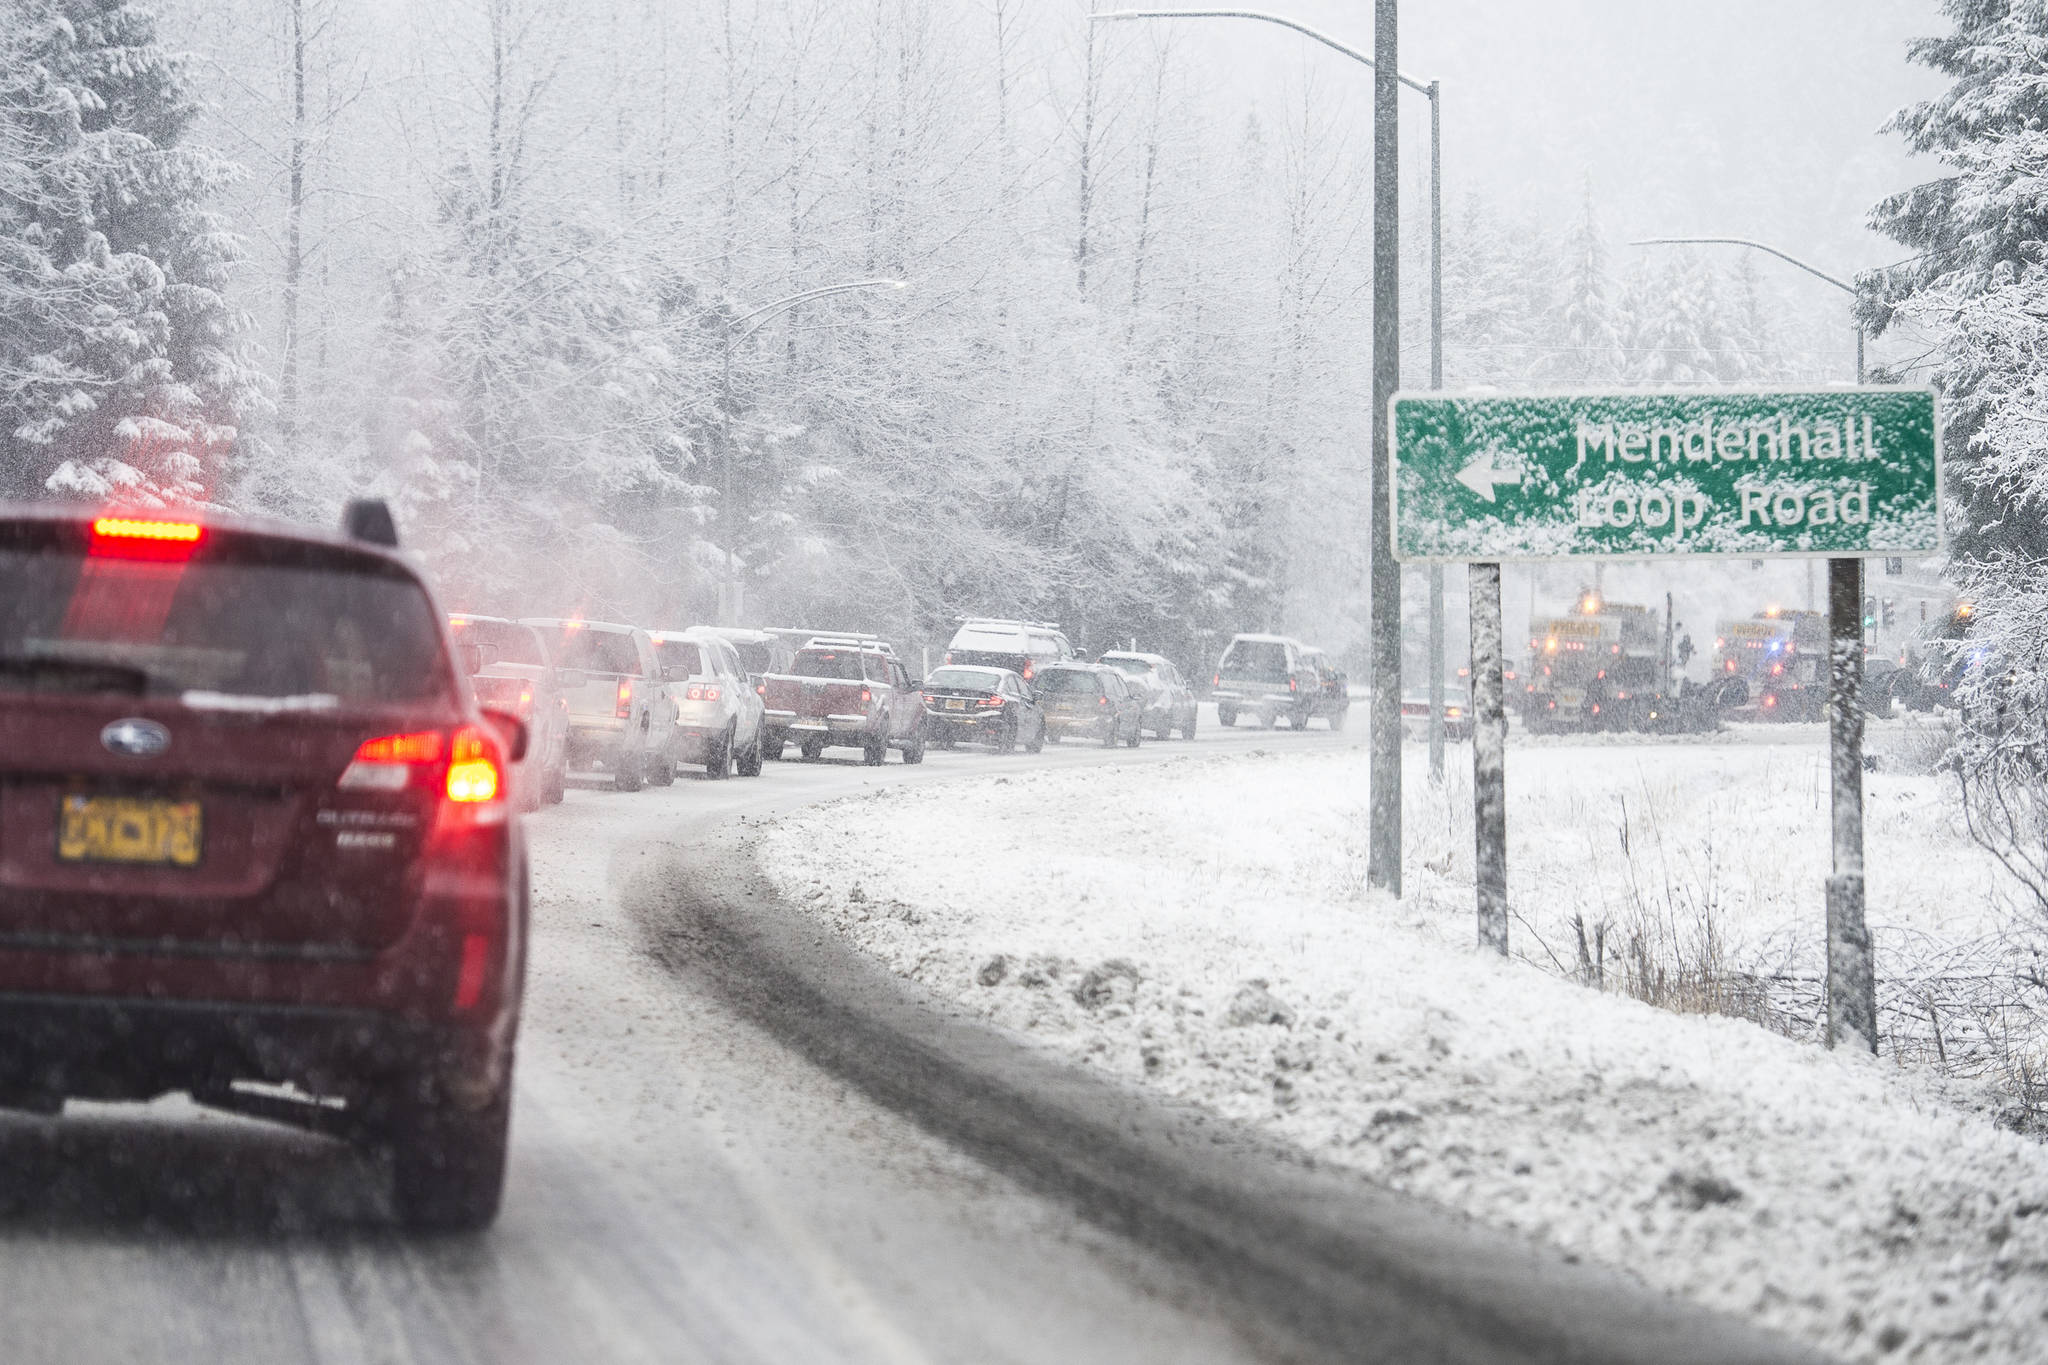 Traffic backs up behind state snow plow trucks during snow fall on Thursday, Dec. 13, 2018. (Michael Penn | Juneau Empire)